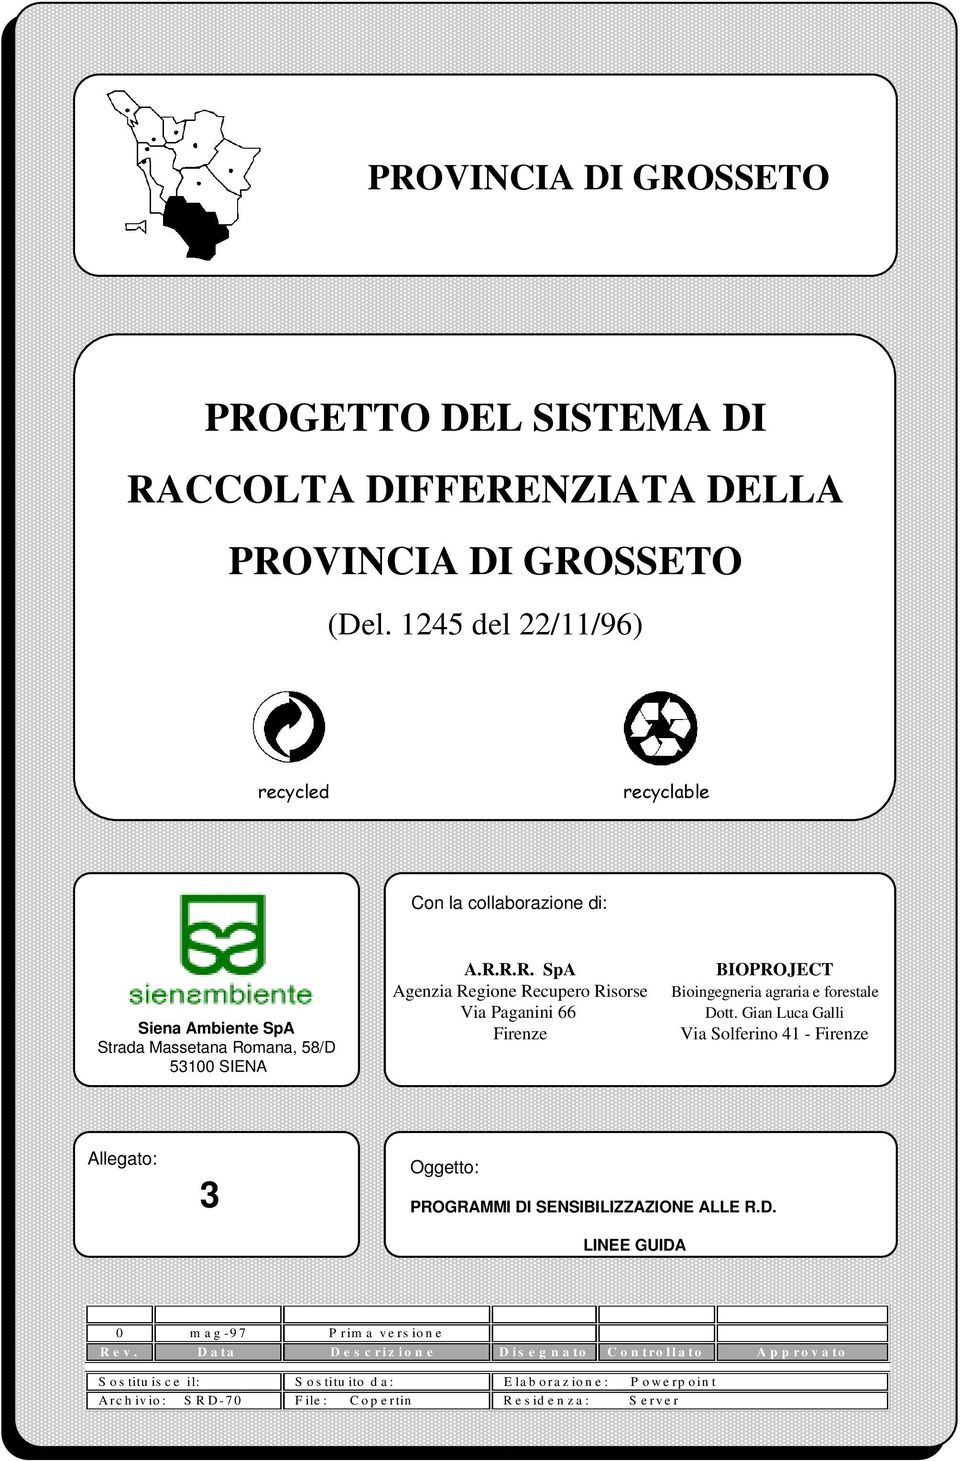 mana, 58/D 53100 SIENA A.R.R.R. SpA Agenzia Regione Recupero Risorse Via Paganini 66 Firenze BIOPROJECT Bioingegneria agraria e forestale Dott.